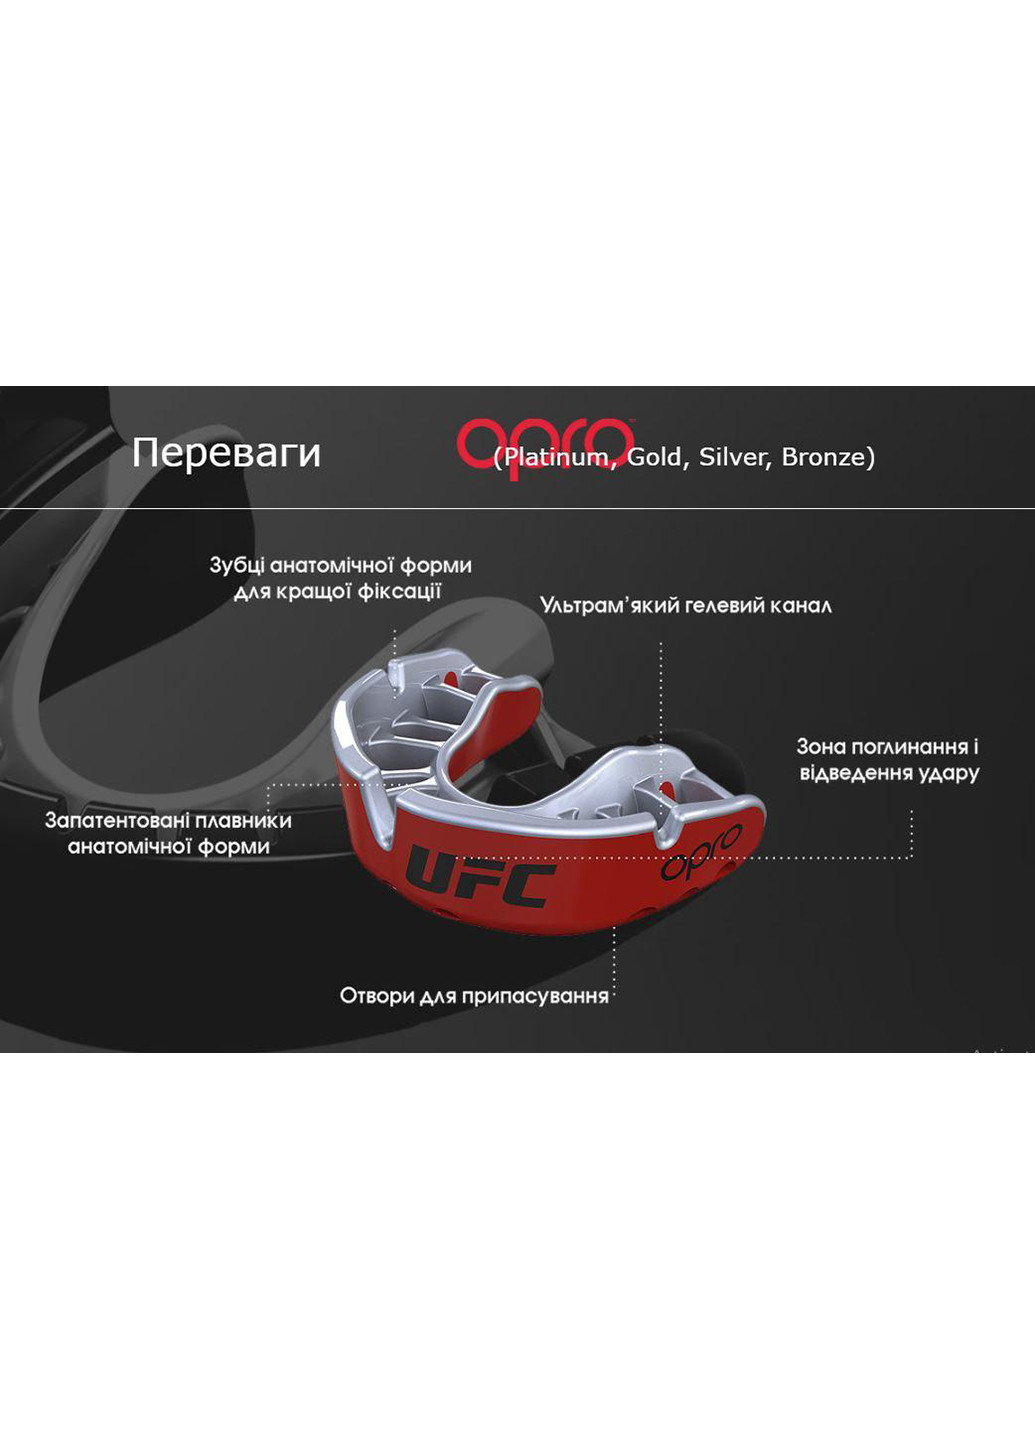 Капа Bronze UFC Hologram Adult Opro (231538584)